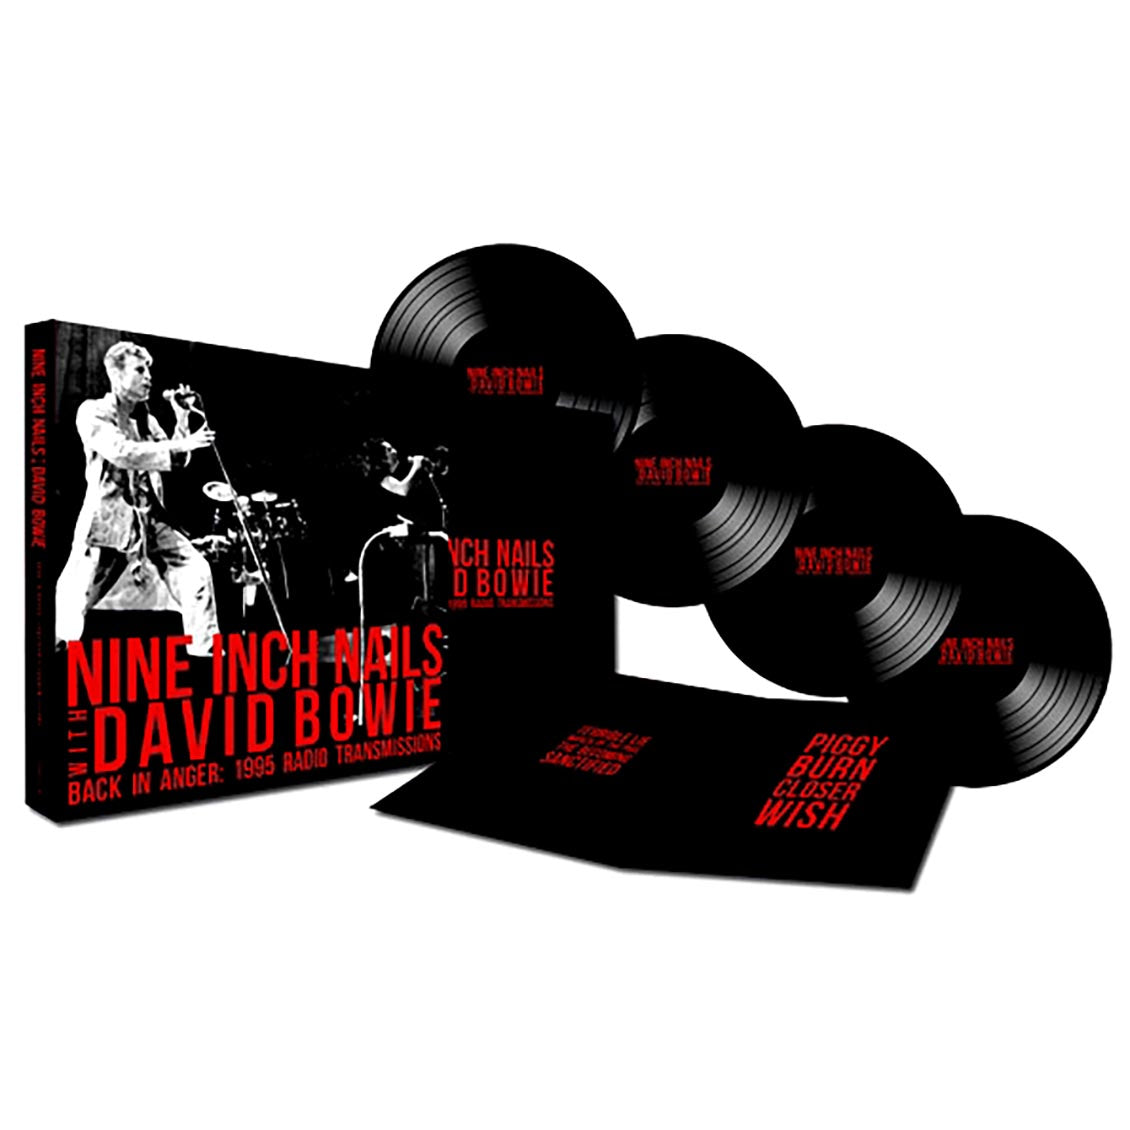 Nine Inch Nails, David Bowie - Back In Anger: 1995 Radio Transmissions (4xLP) (box set) - Vinyl LP